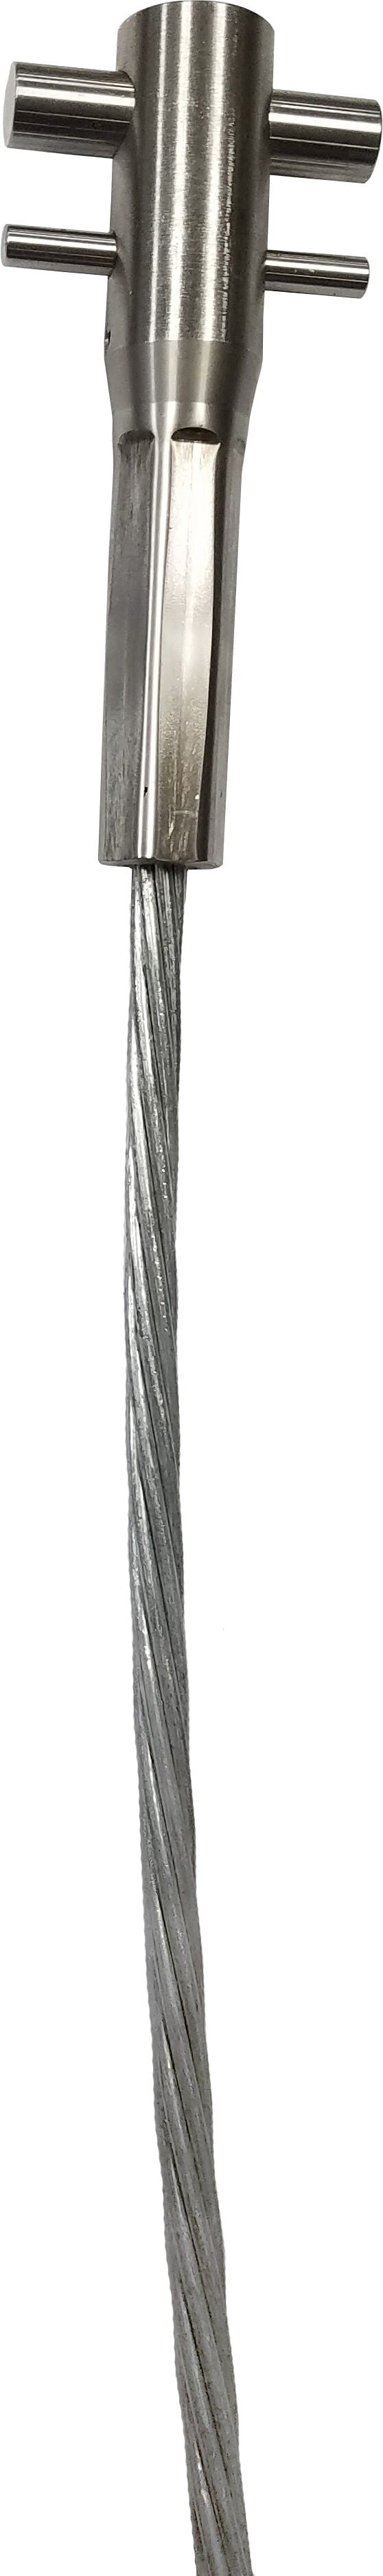 3M™ DBI-SALA® Lad-Saf™ Swaged Cable 6115018, 3/8 Inch, Galvanized Steel, 25 m